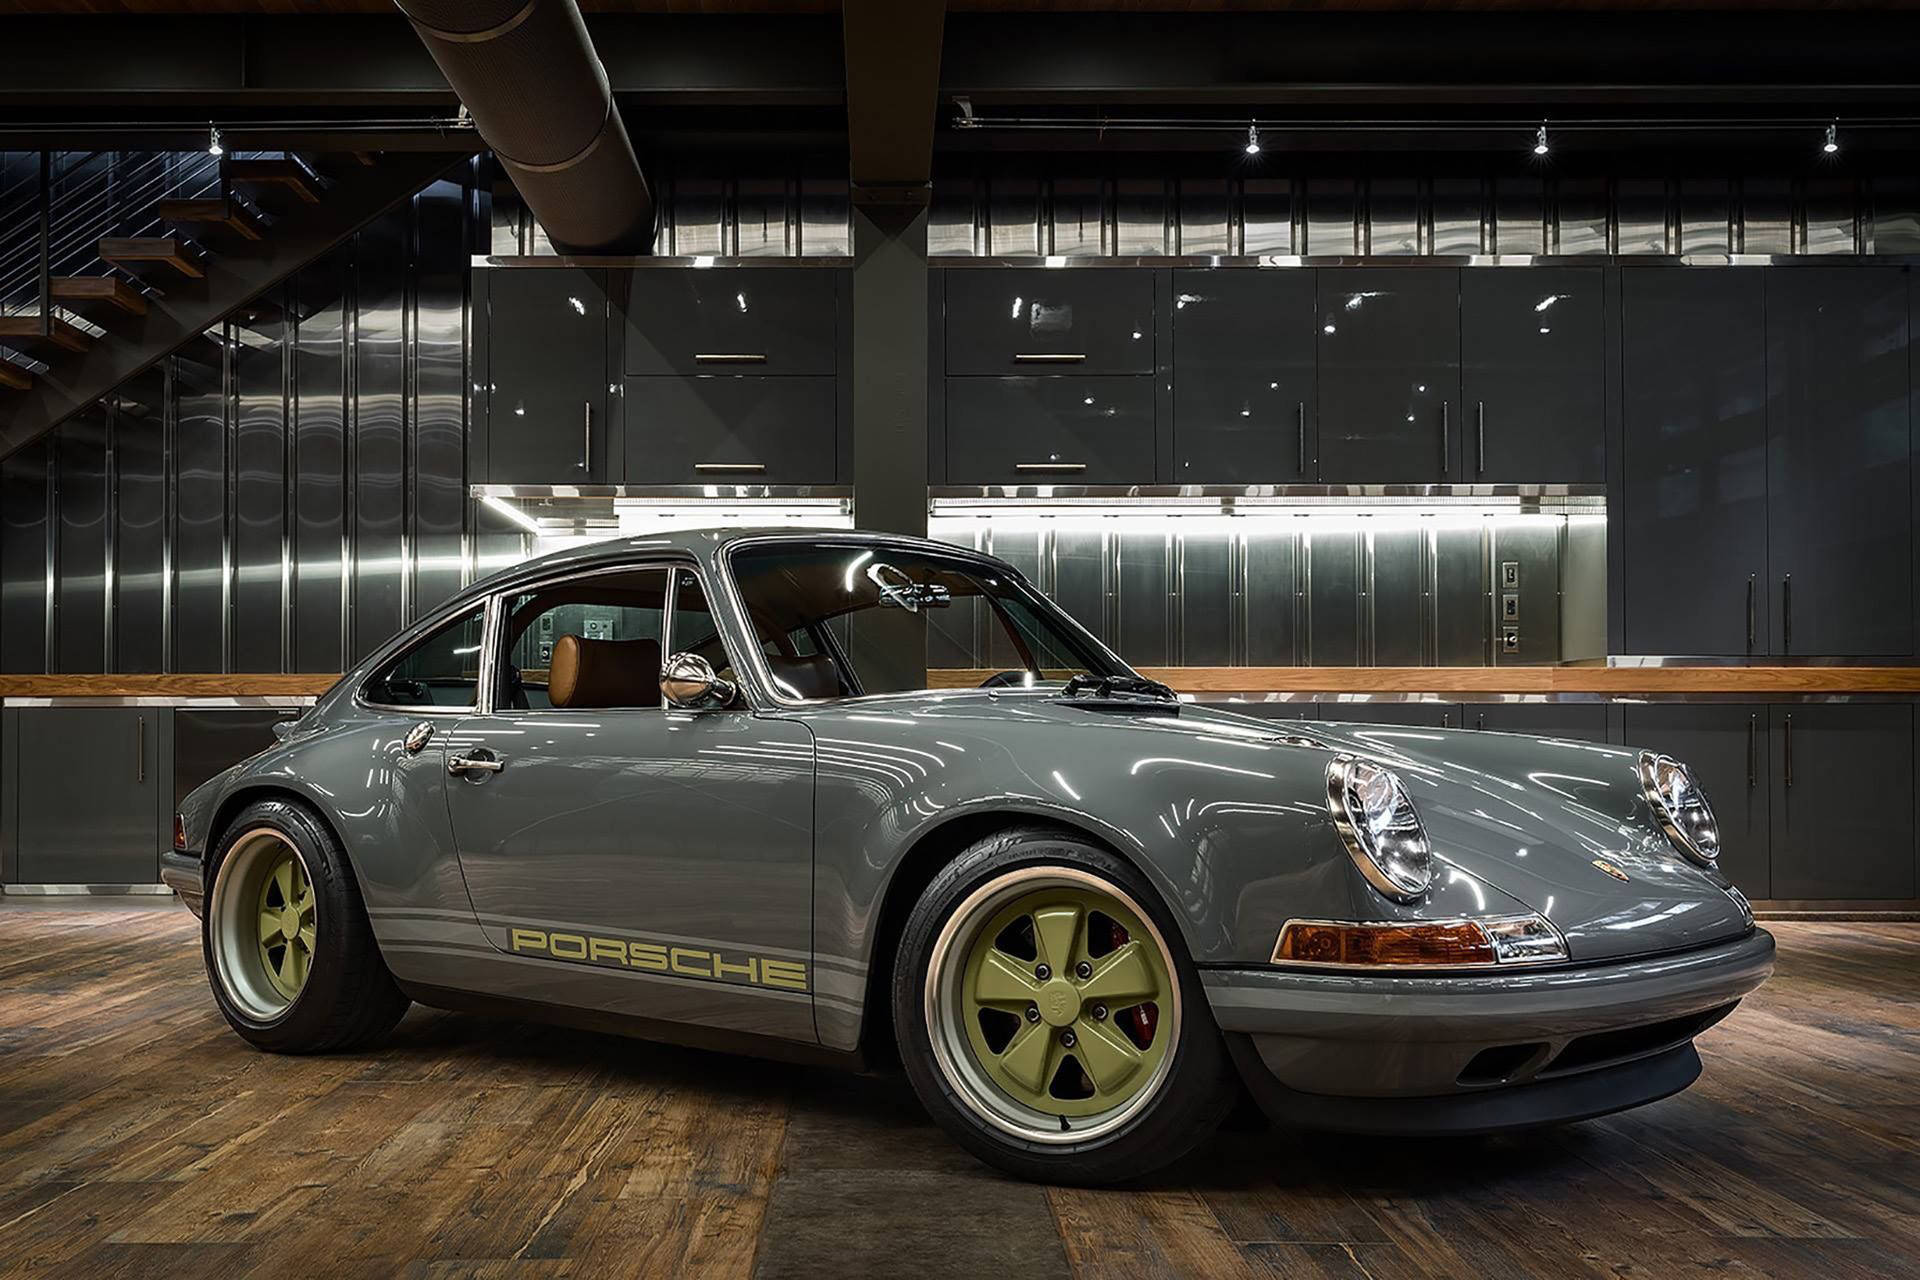 Singer Porsche Glossy Gray Wallpaper